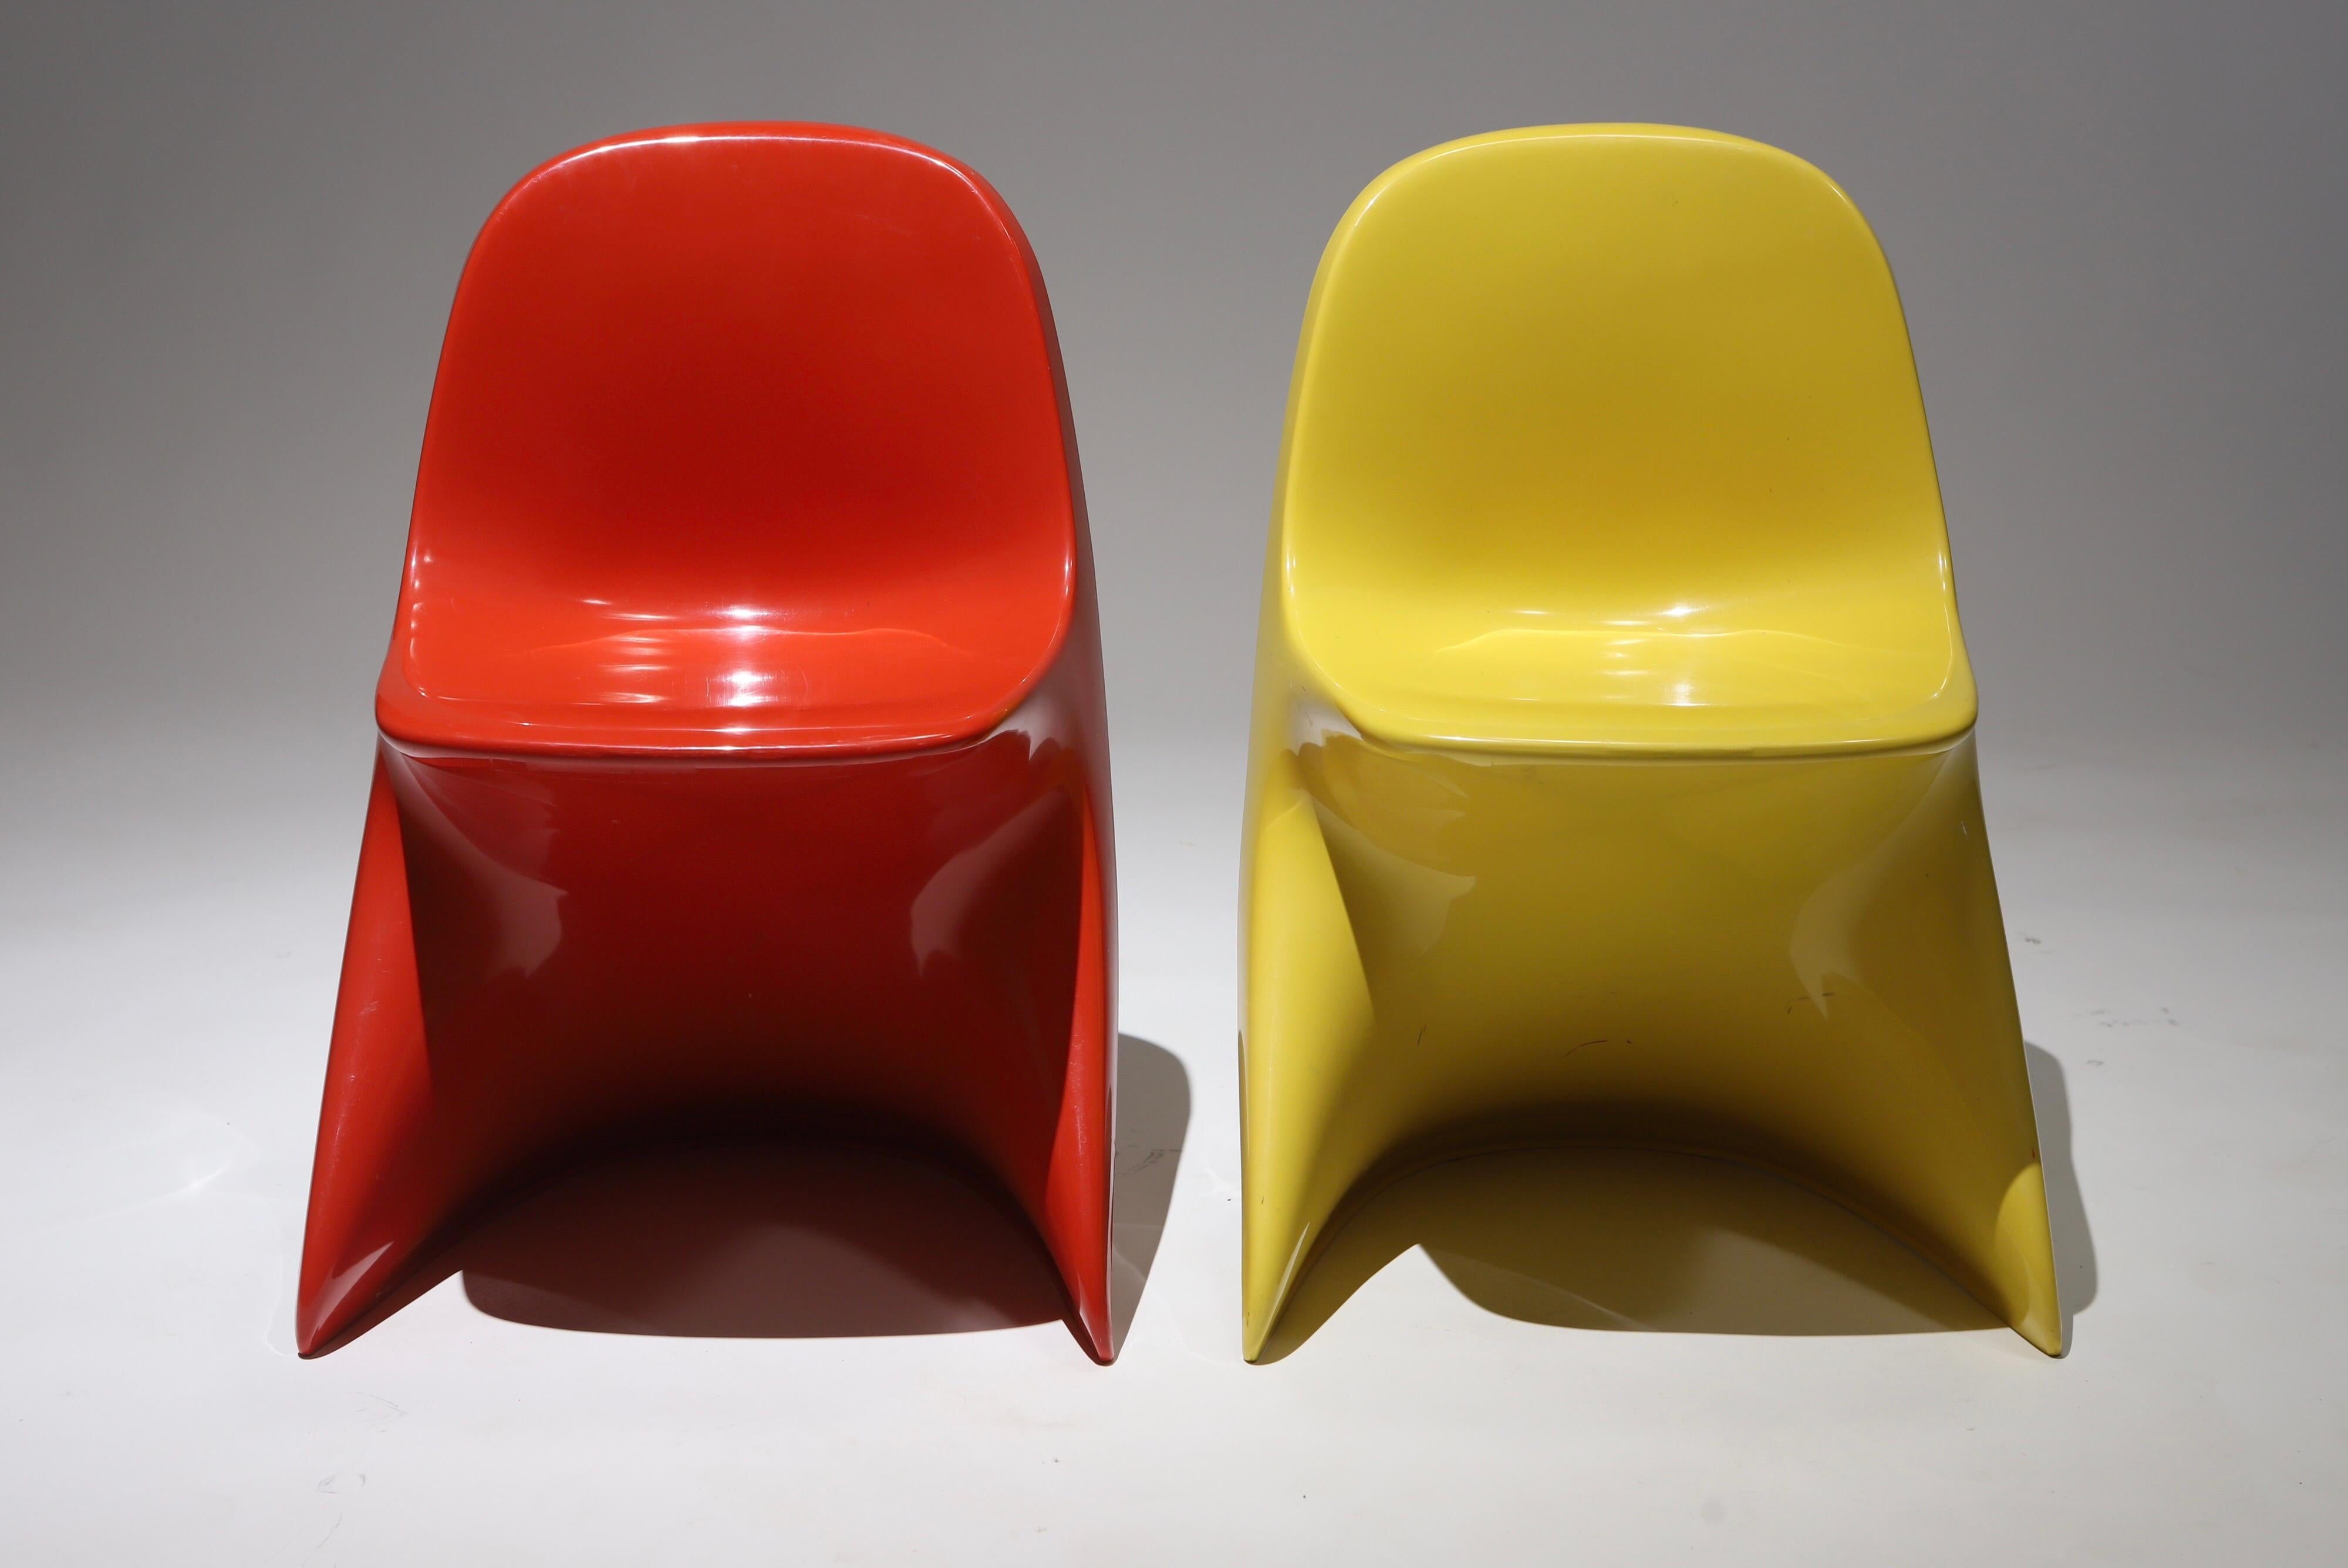 Red Casalino Childs Chair 1